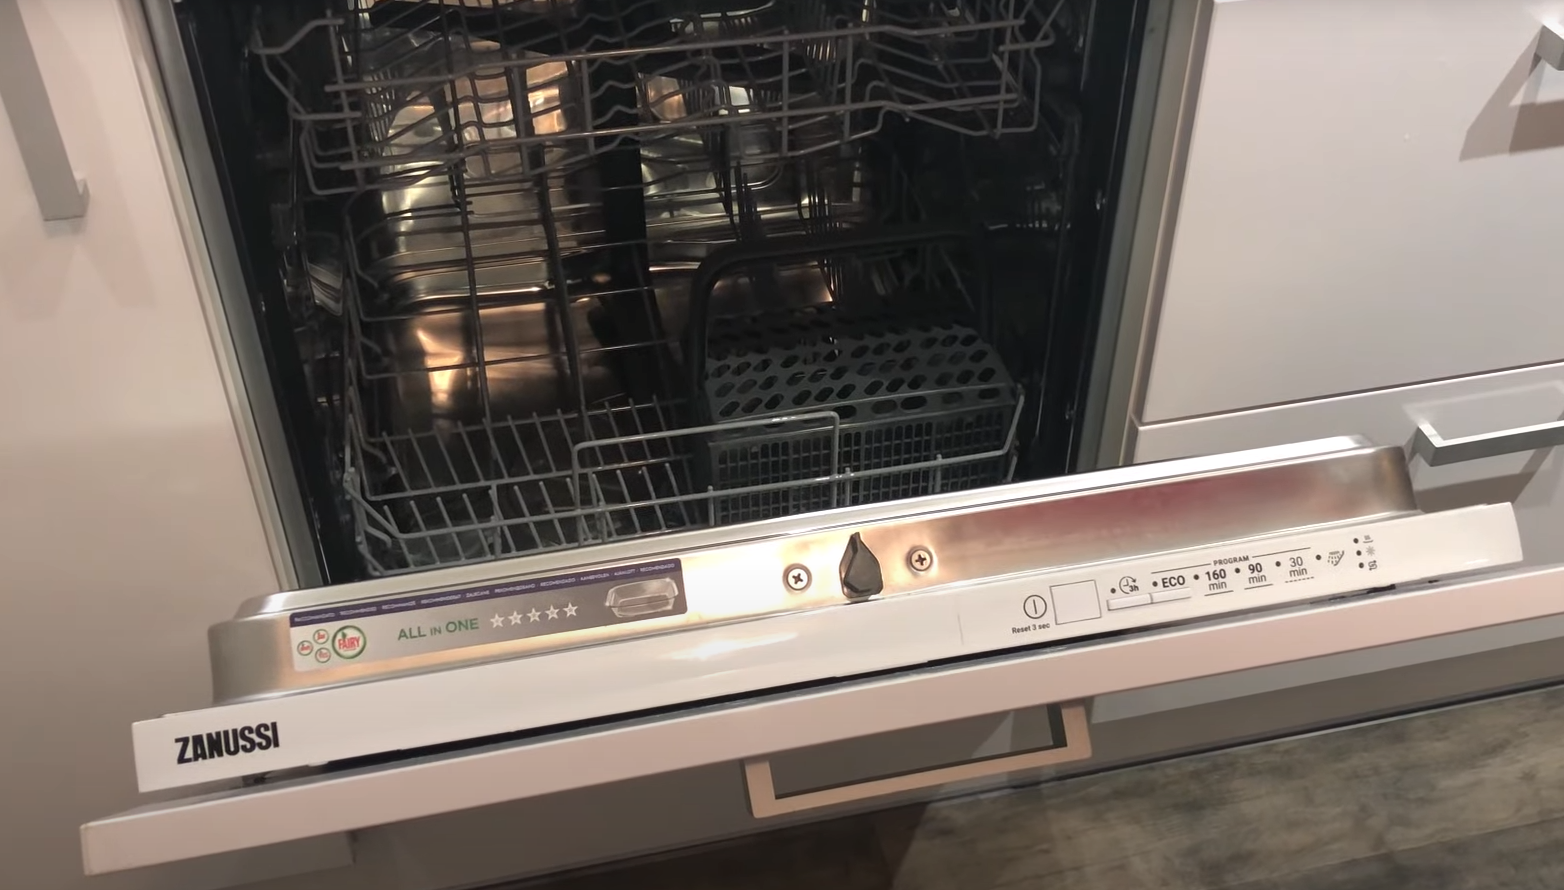 Zanussi Dishwasher with the door opened